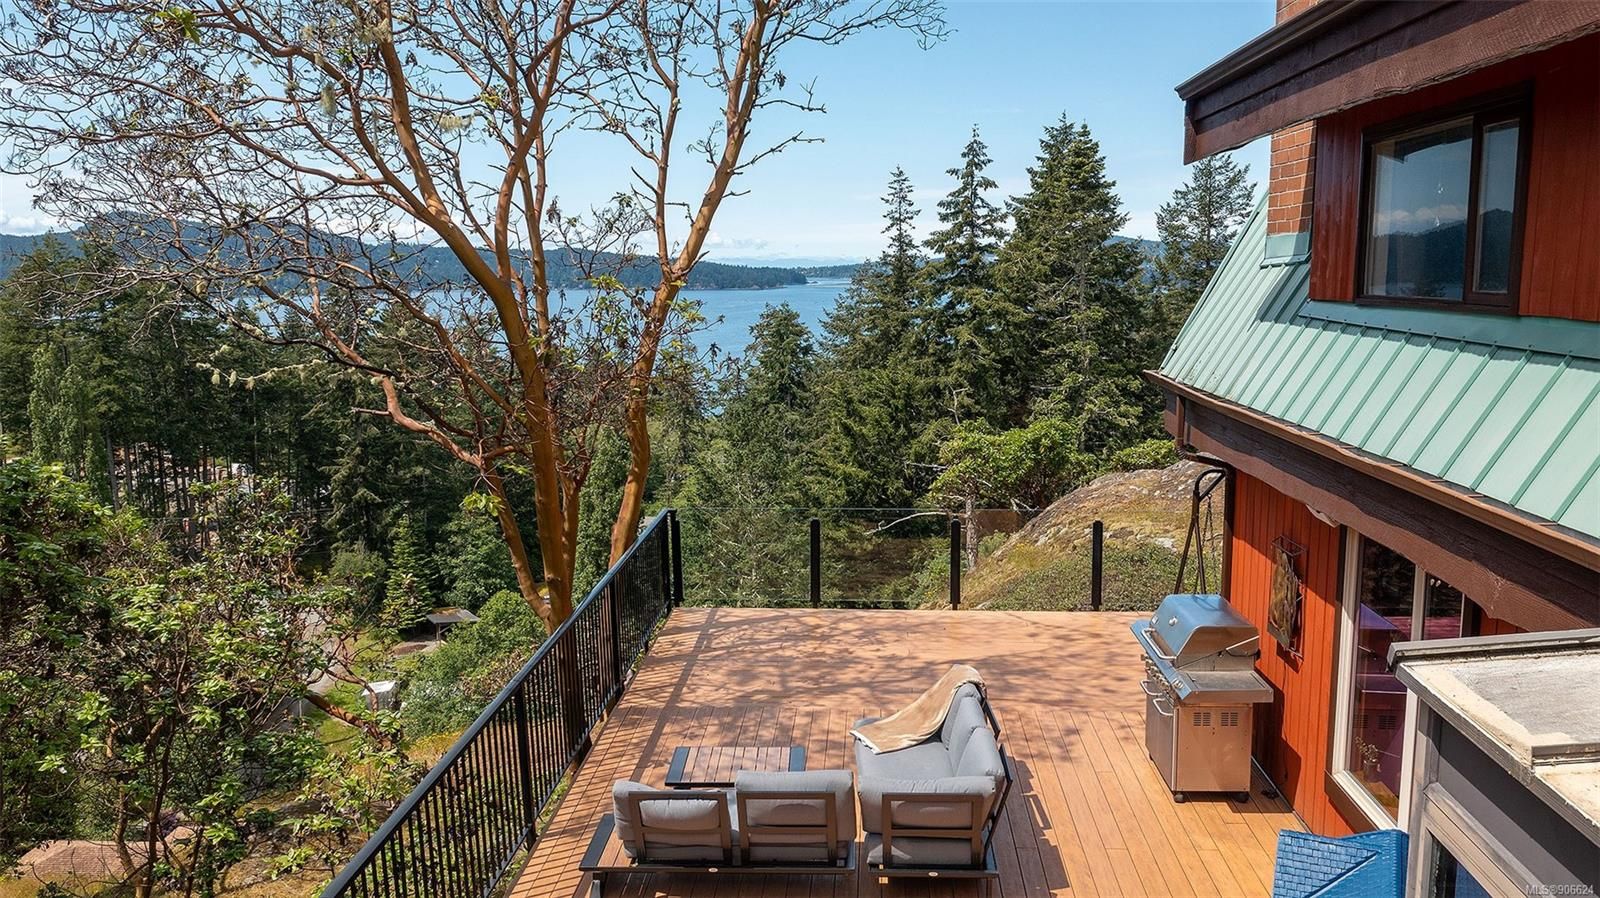 Wrap around deck with stunning views